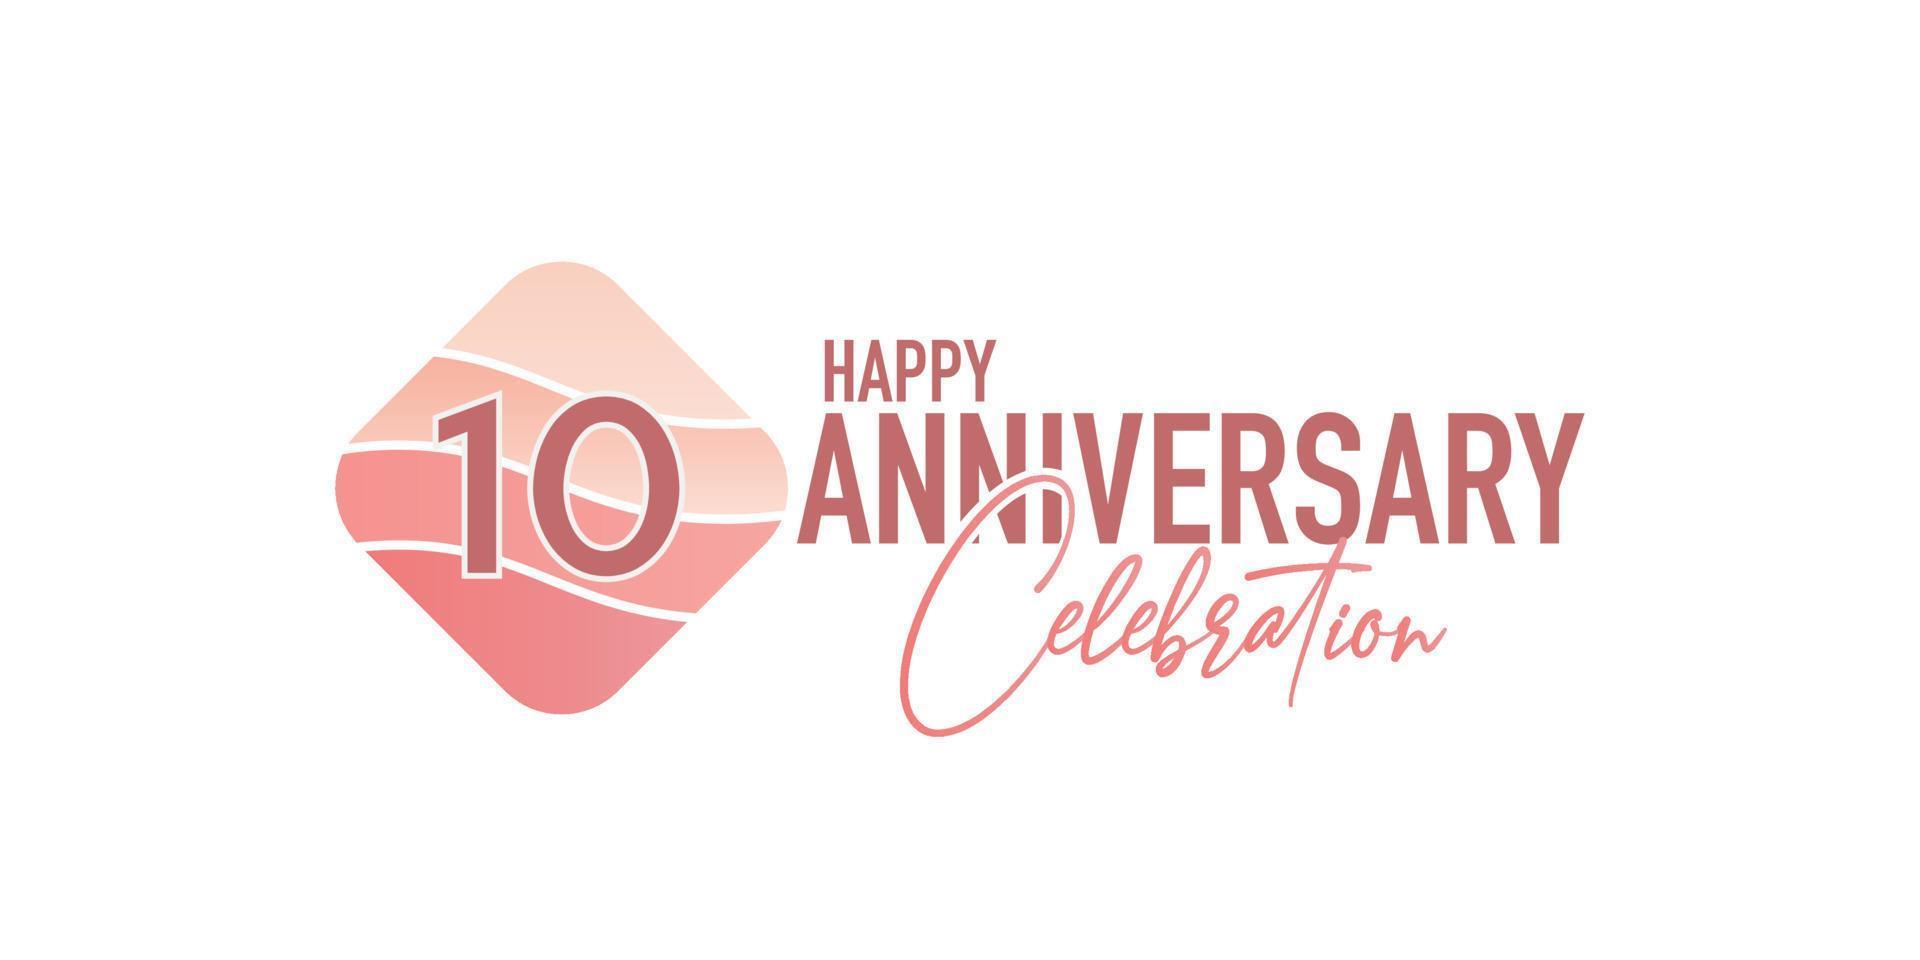 10 years anniversary logo vector illustration design celebration with pink geometric design